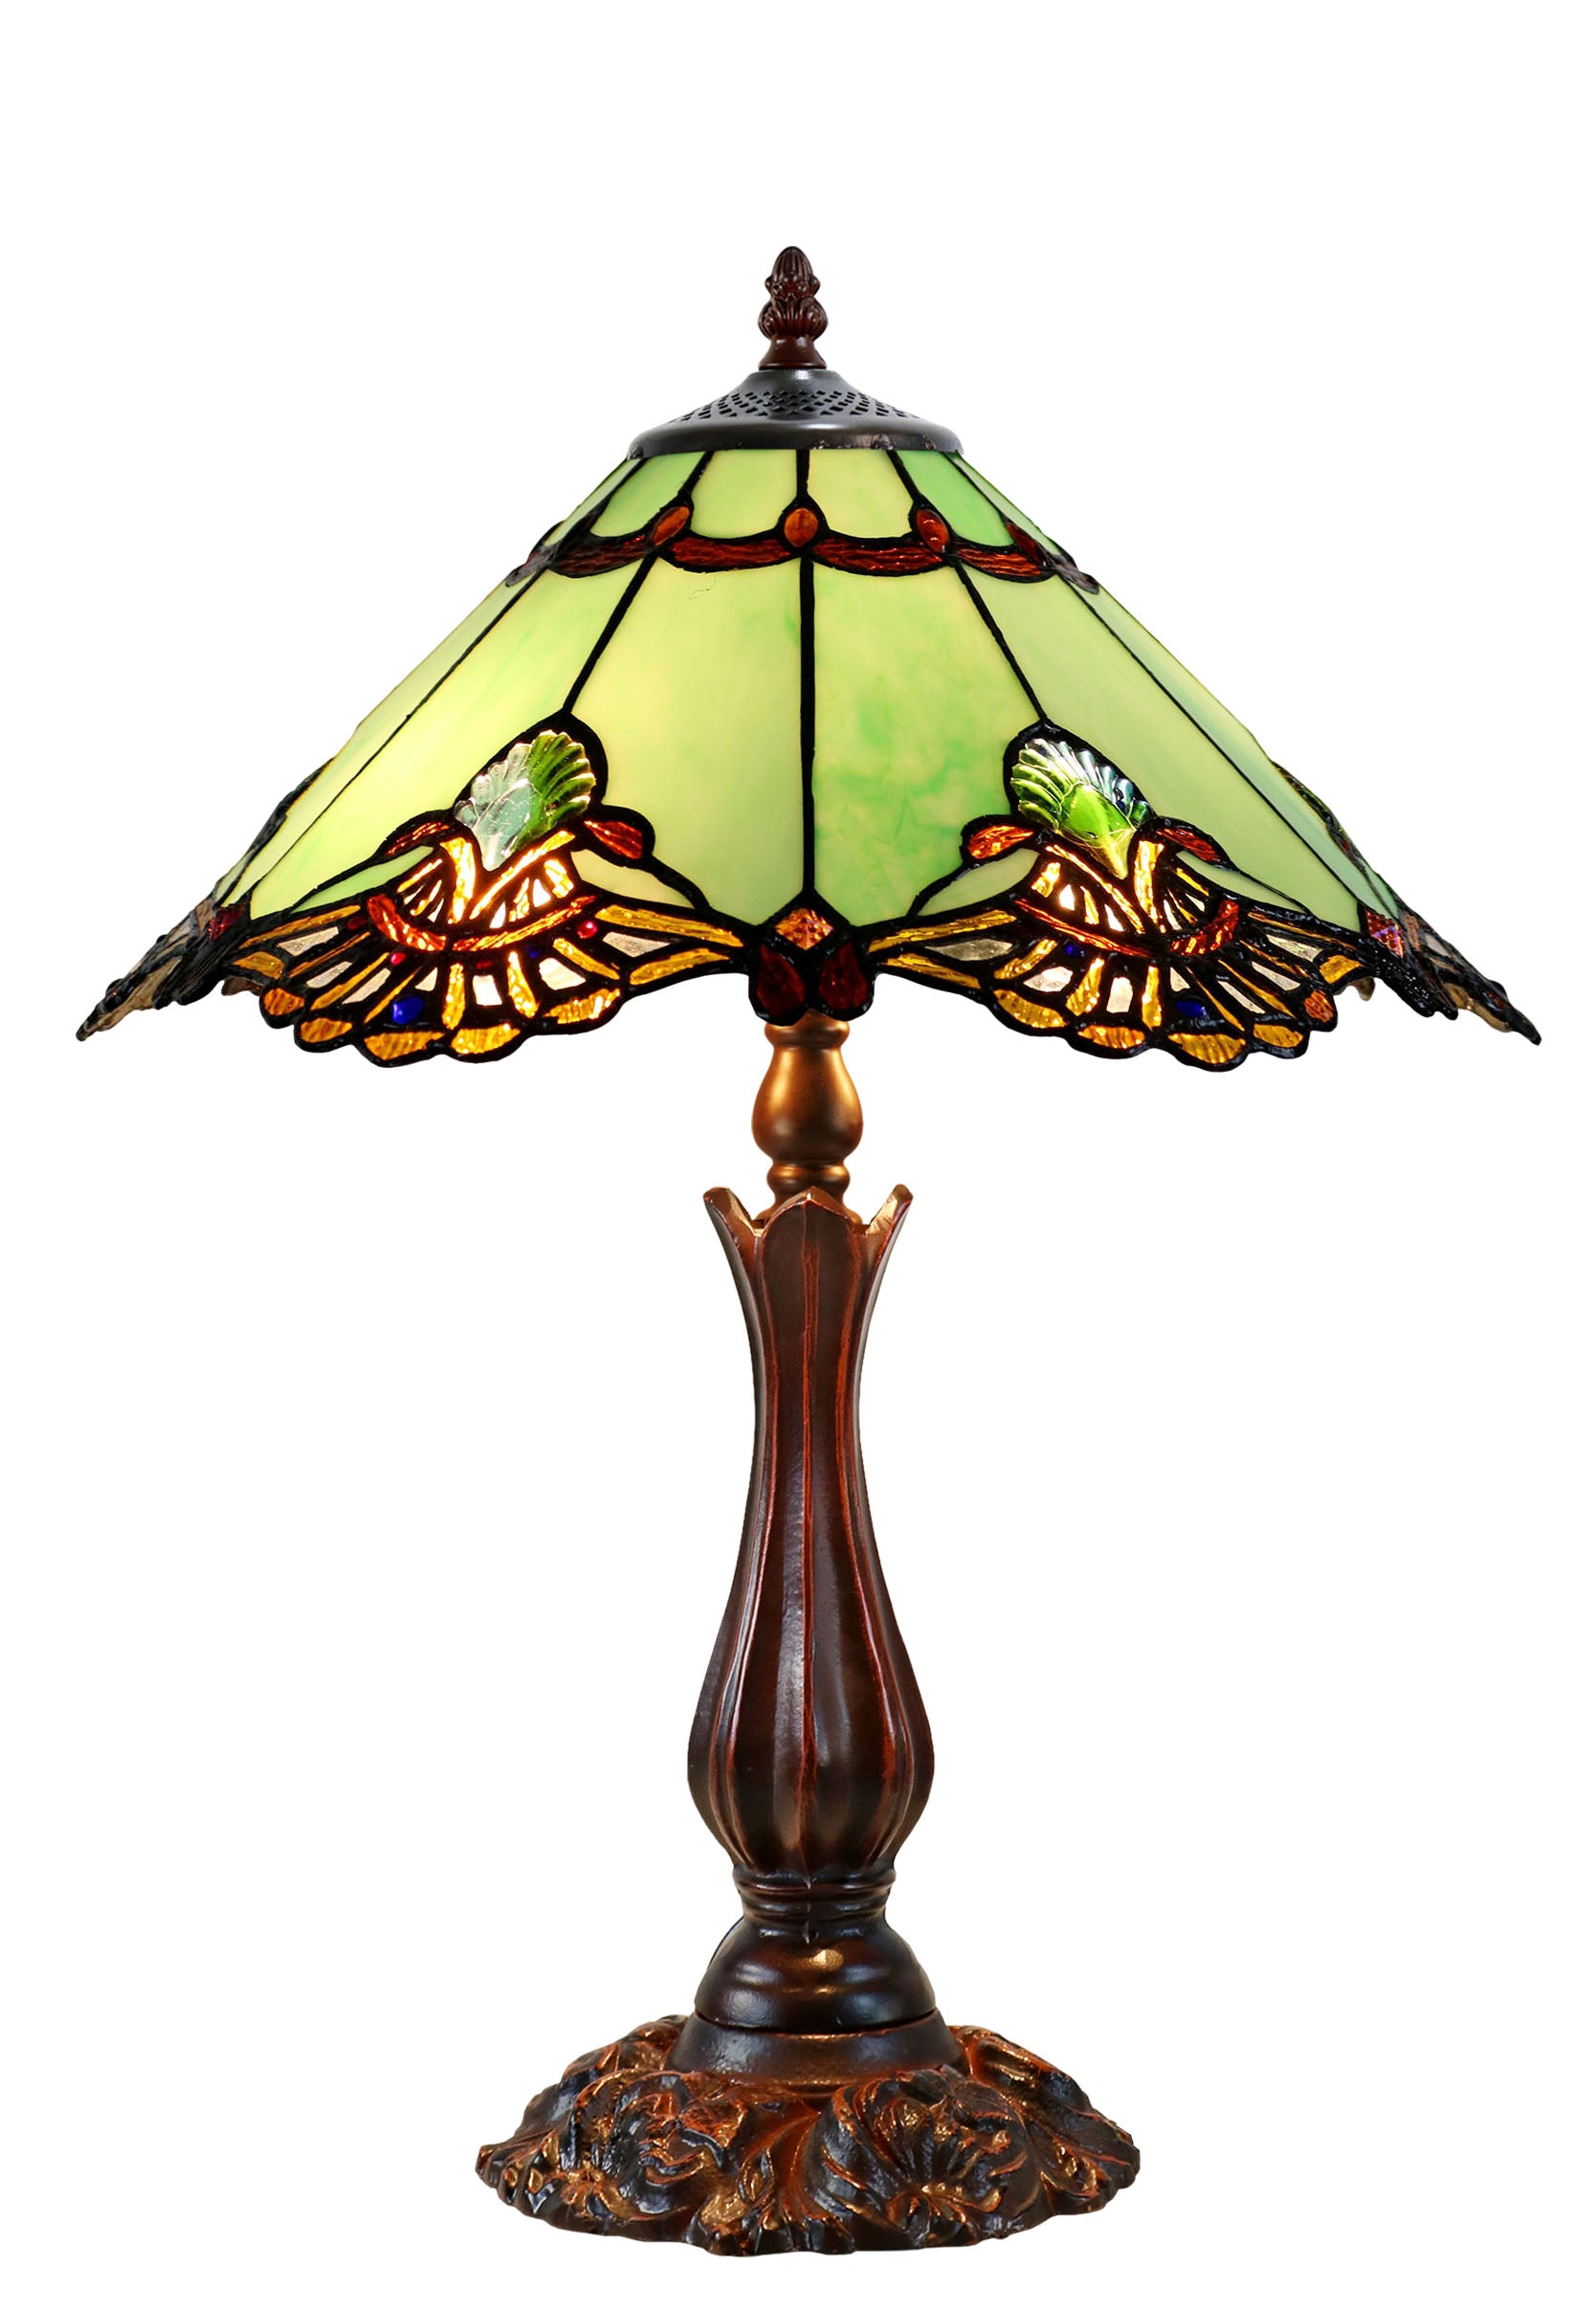 Large 16" Carousel Jadestone Accent Tiffany Lamp Table Lamps-Green